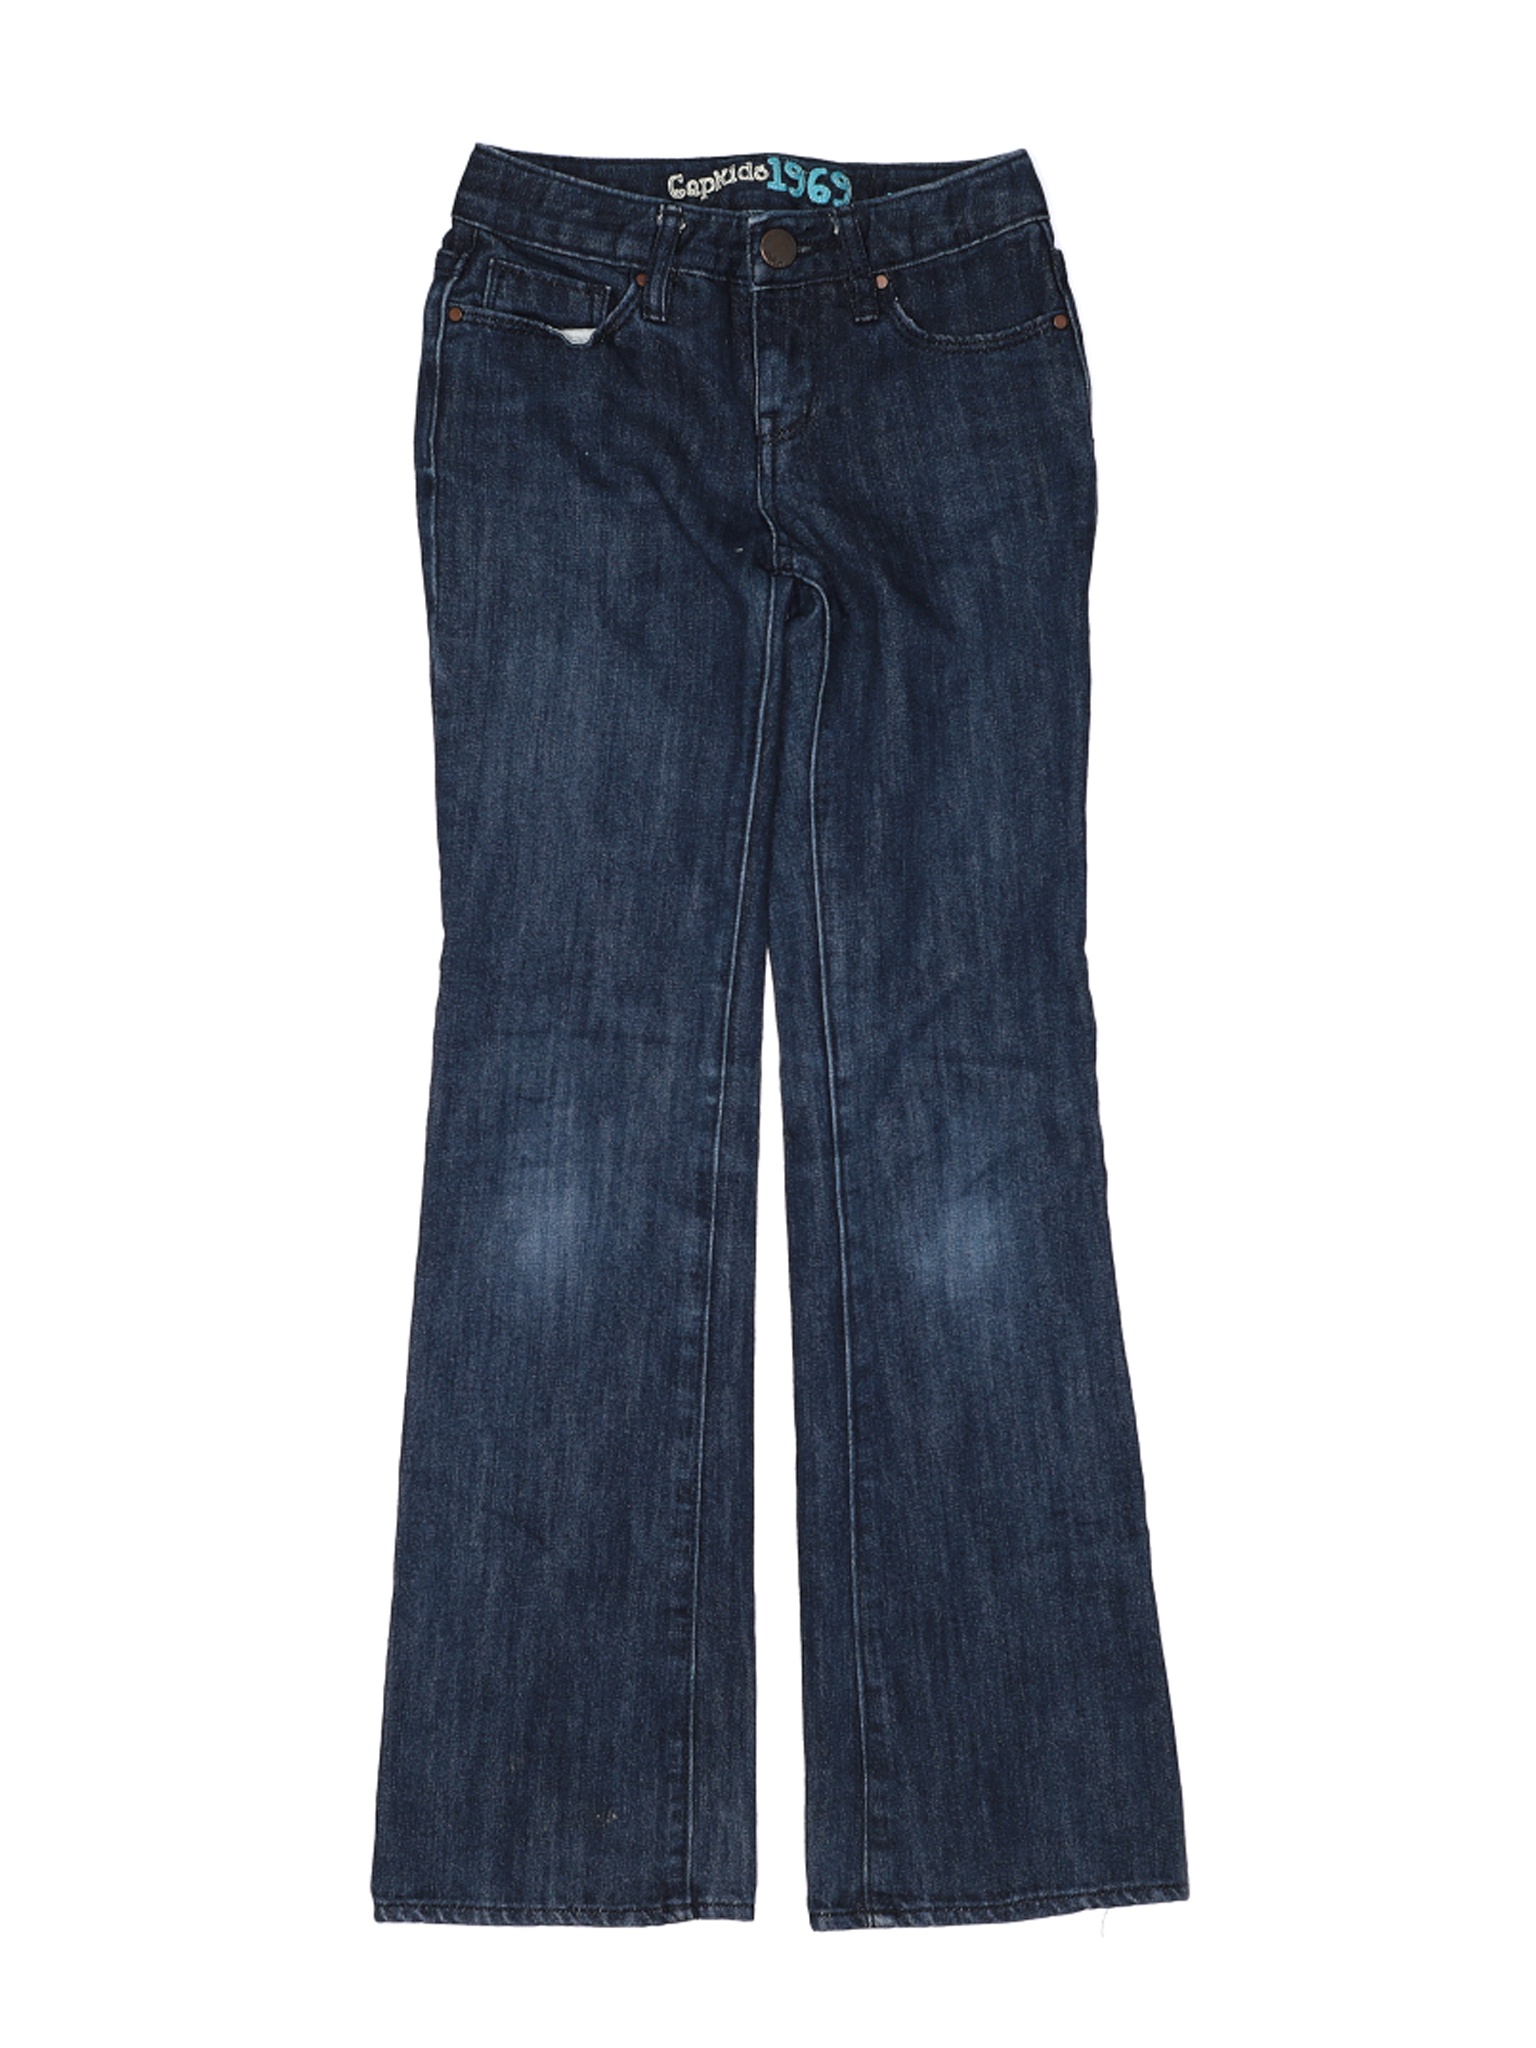 Gap Kids Girls Blue Jeans 10 Slim | eBay